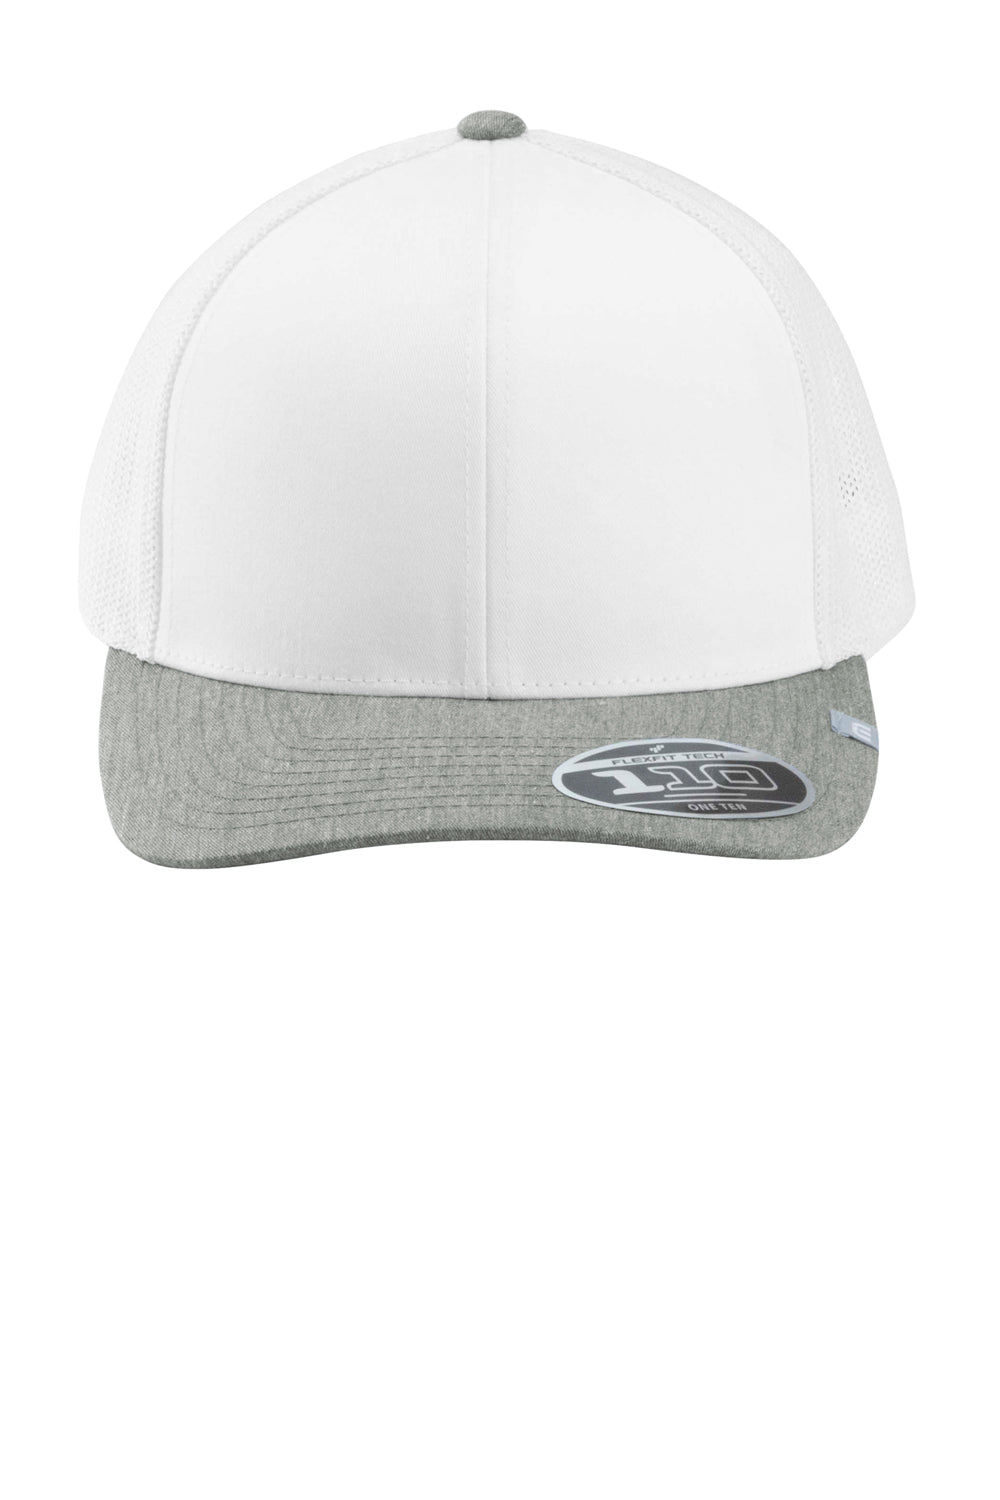 TravisMathew TM1MY390 Mens Cruz Colorblock Adjustable Trucker Hat White/Heather Grey Flat Front